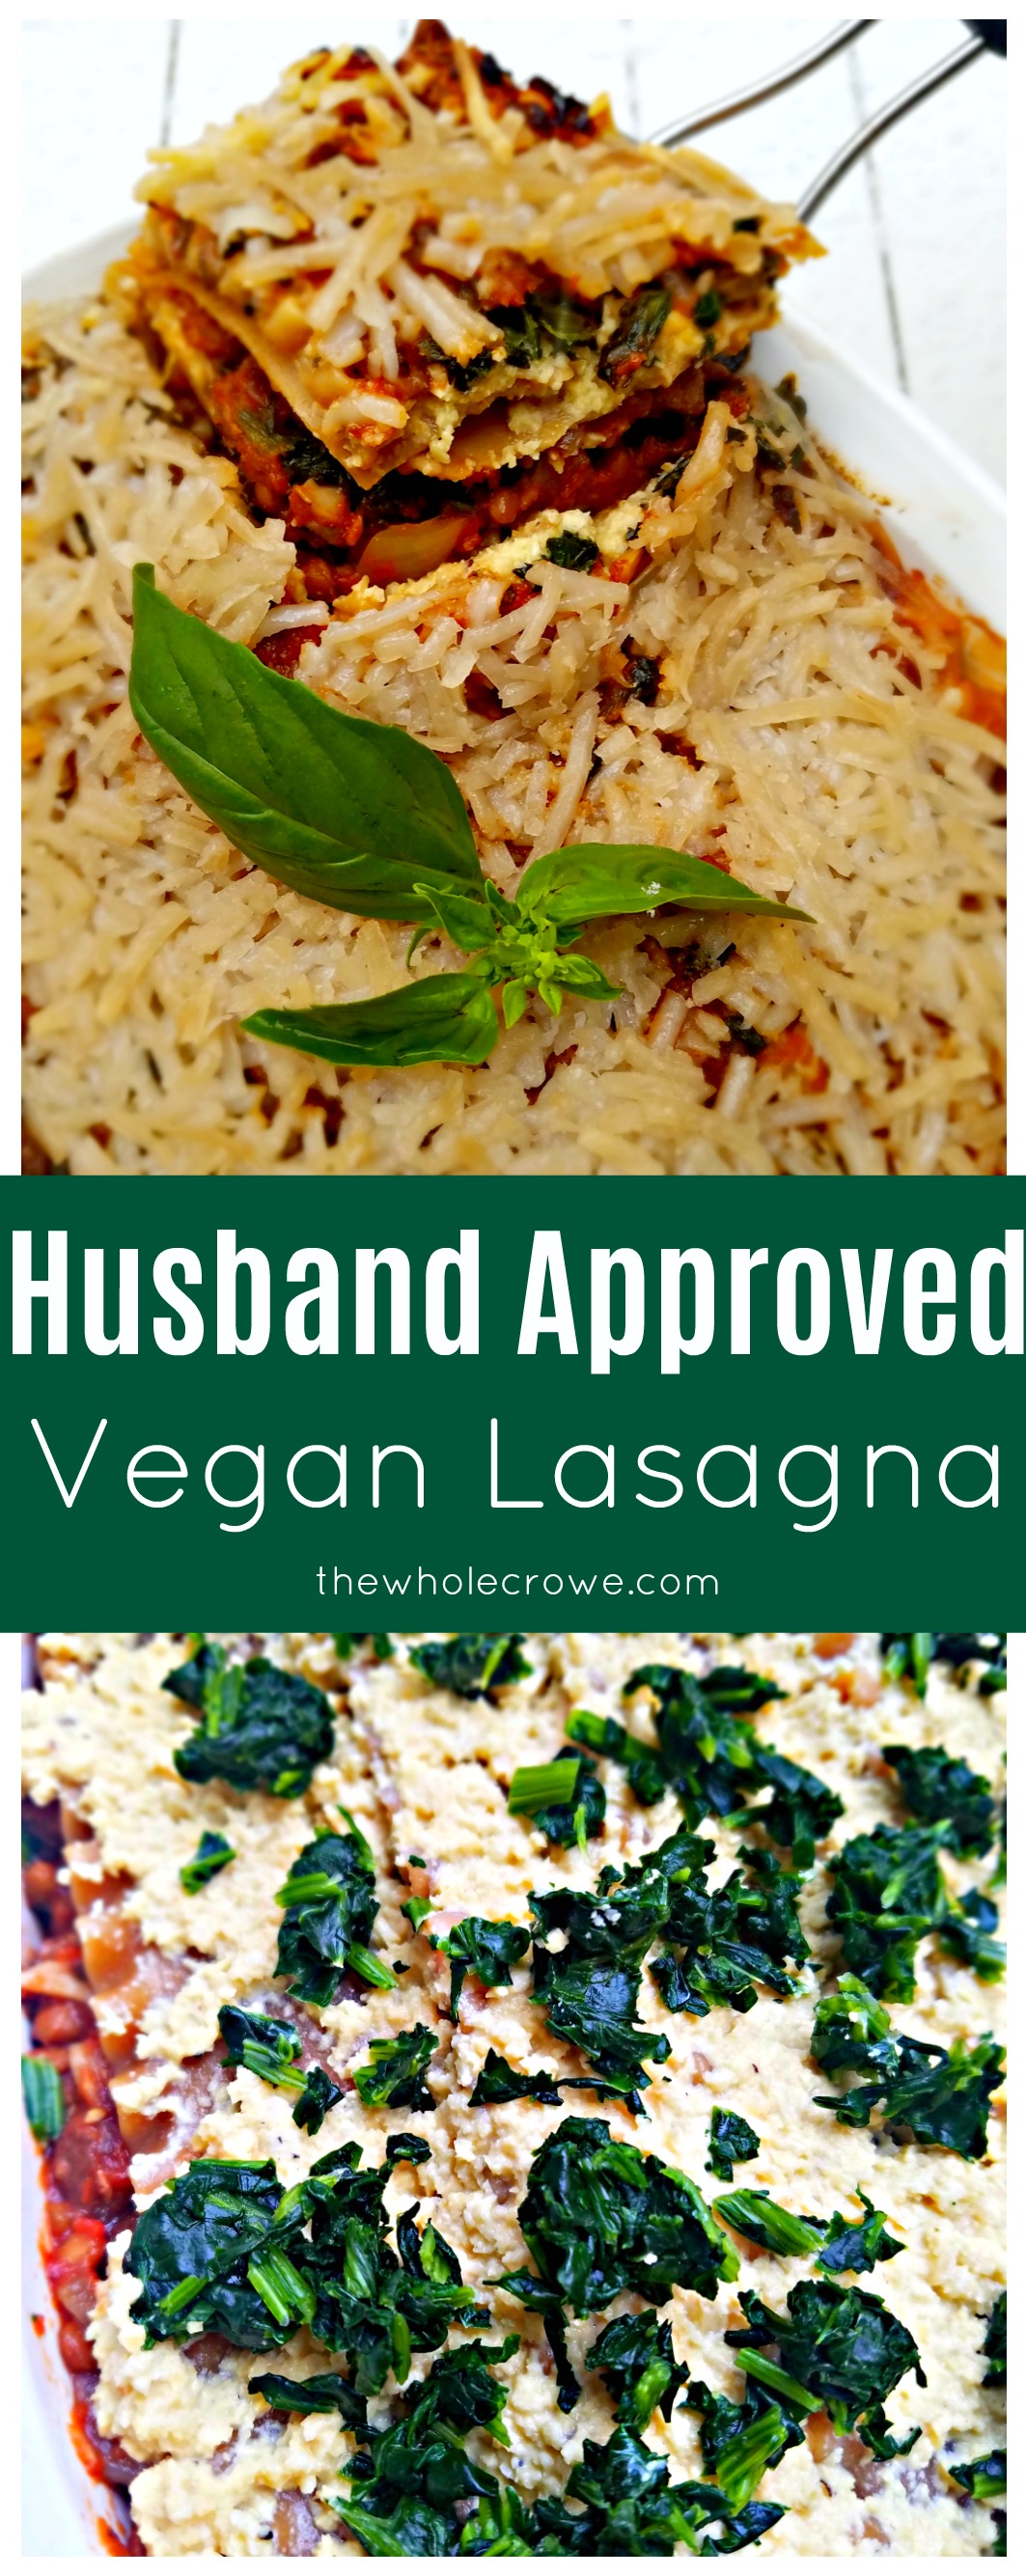 Husband Approved Vegan Lasagna